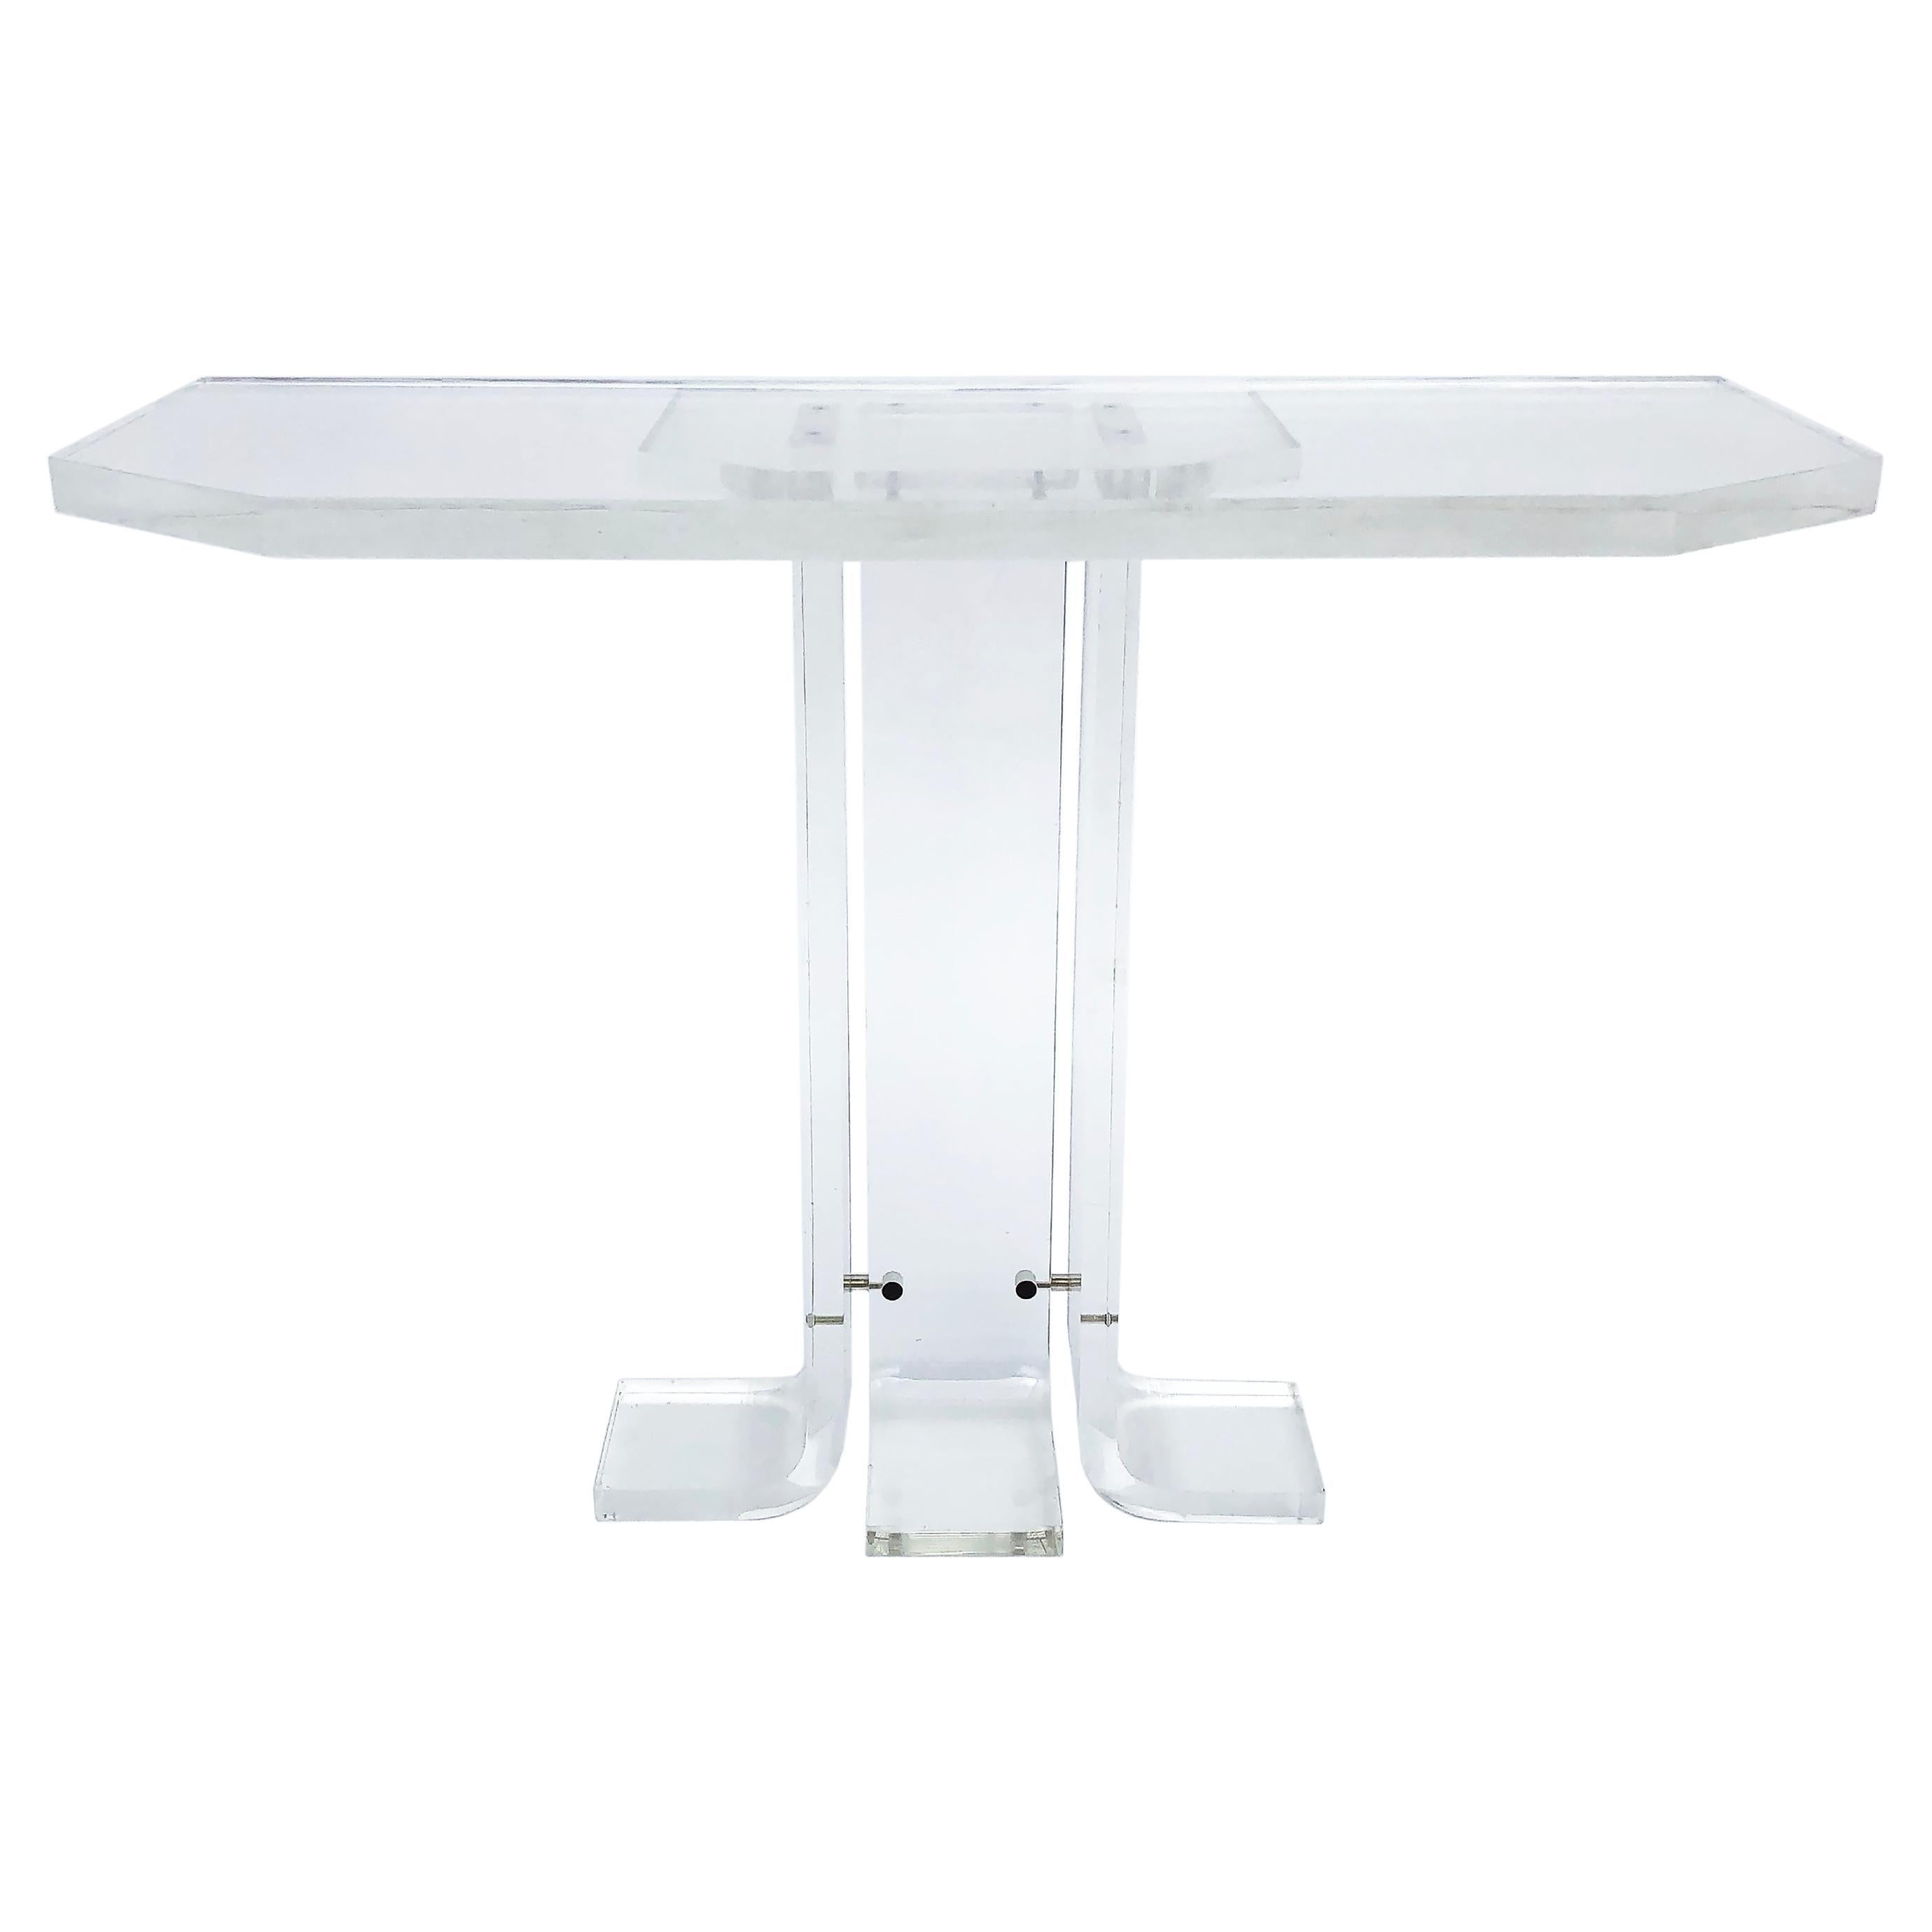 Table console en plexiglas acrylique postmoderne style Hollywood Regency des années 1970 